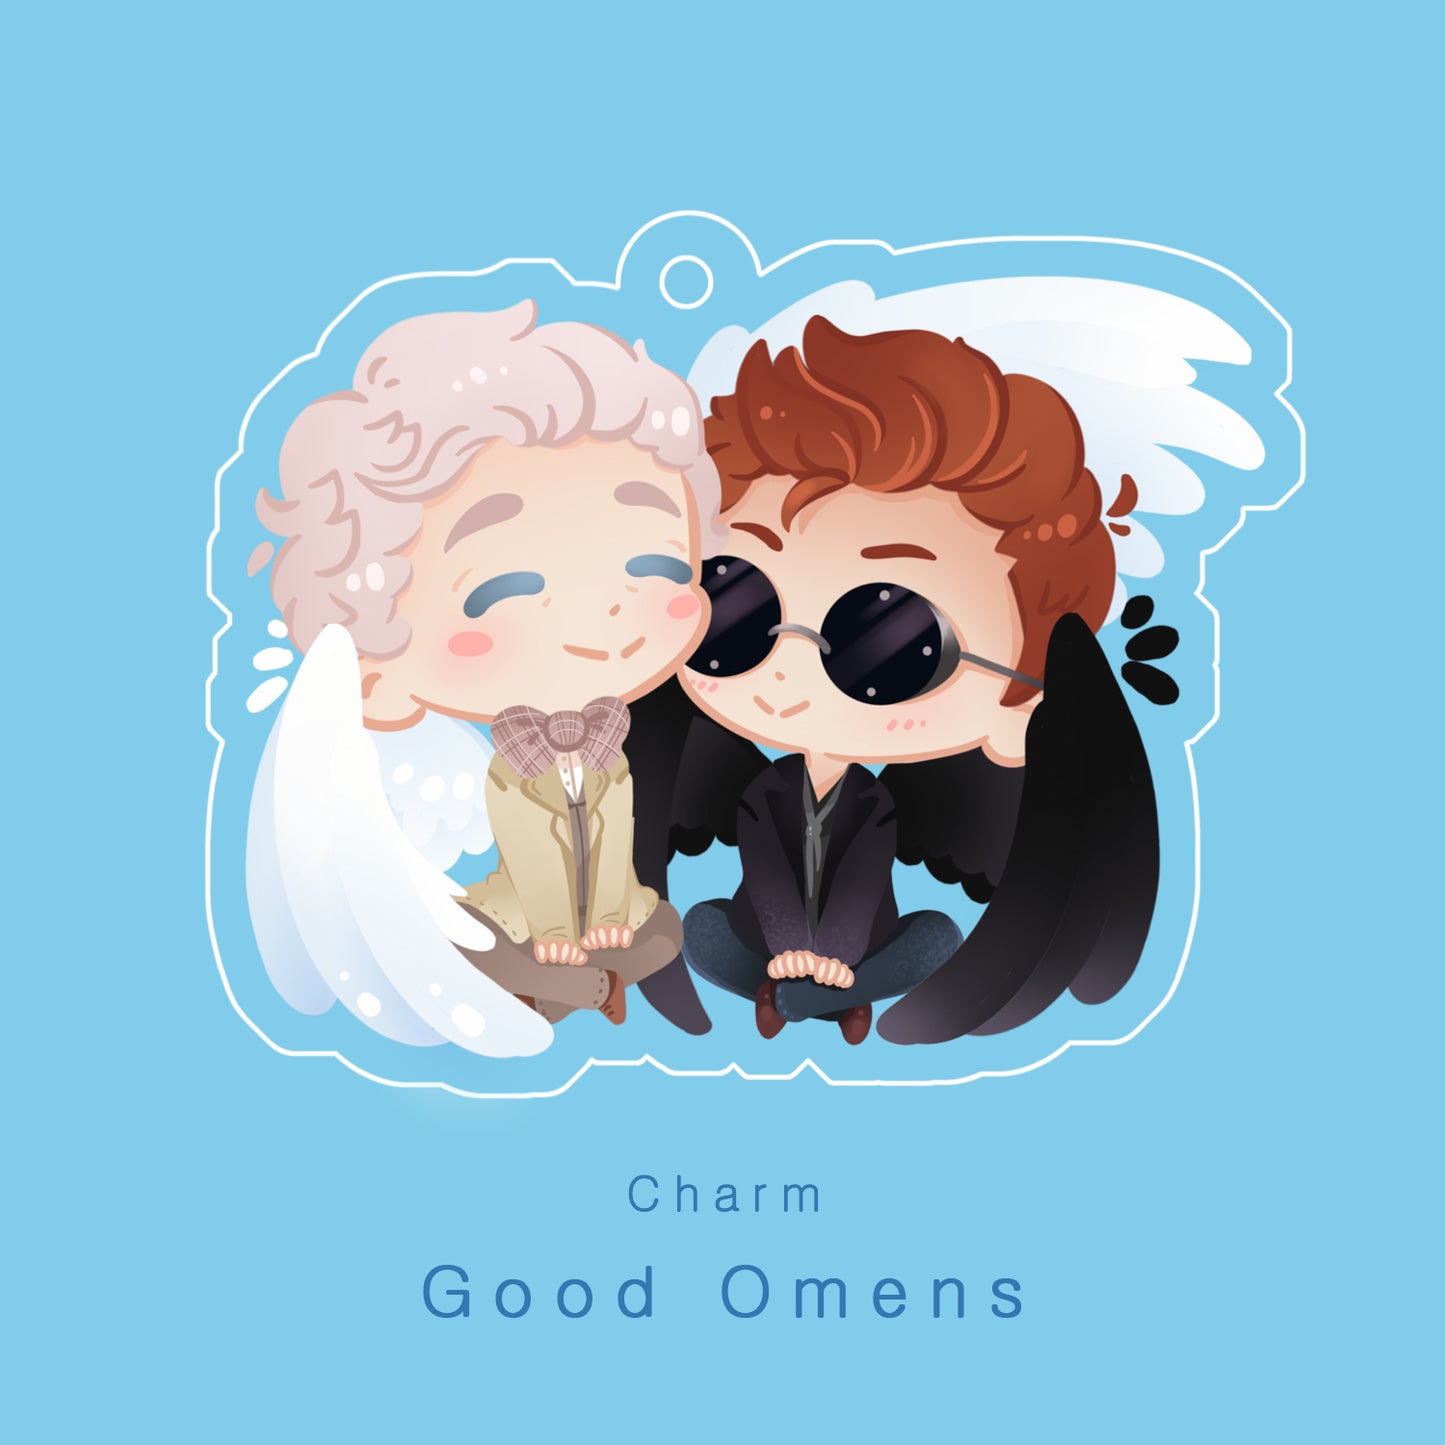 [Good Omens] - Charm